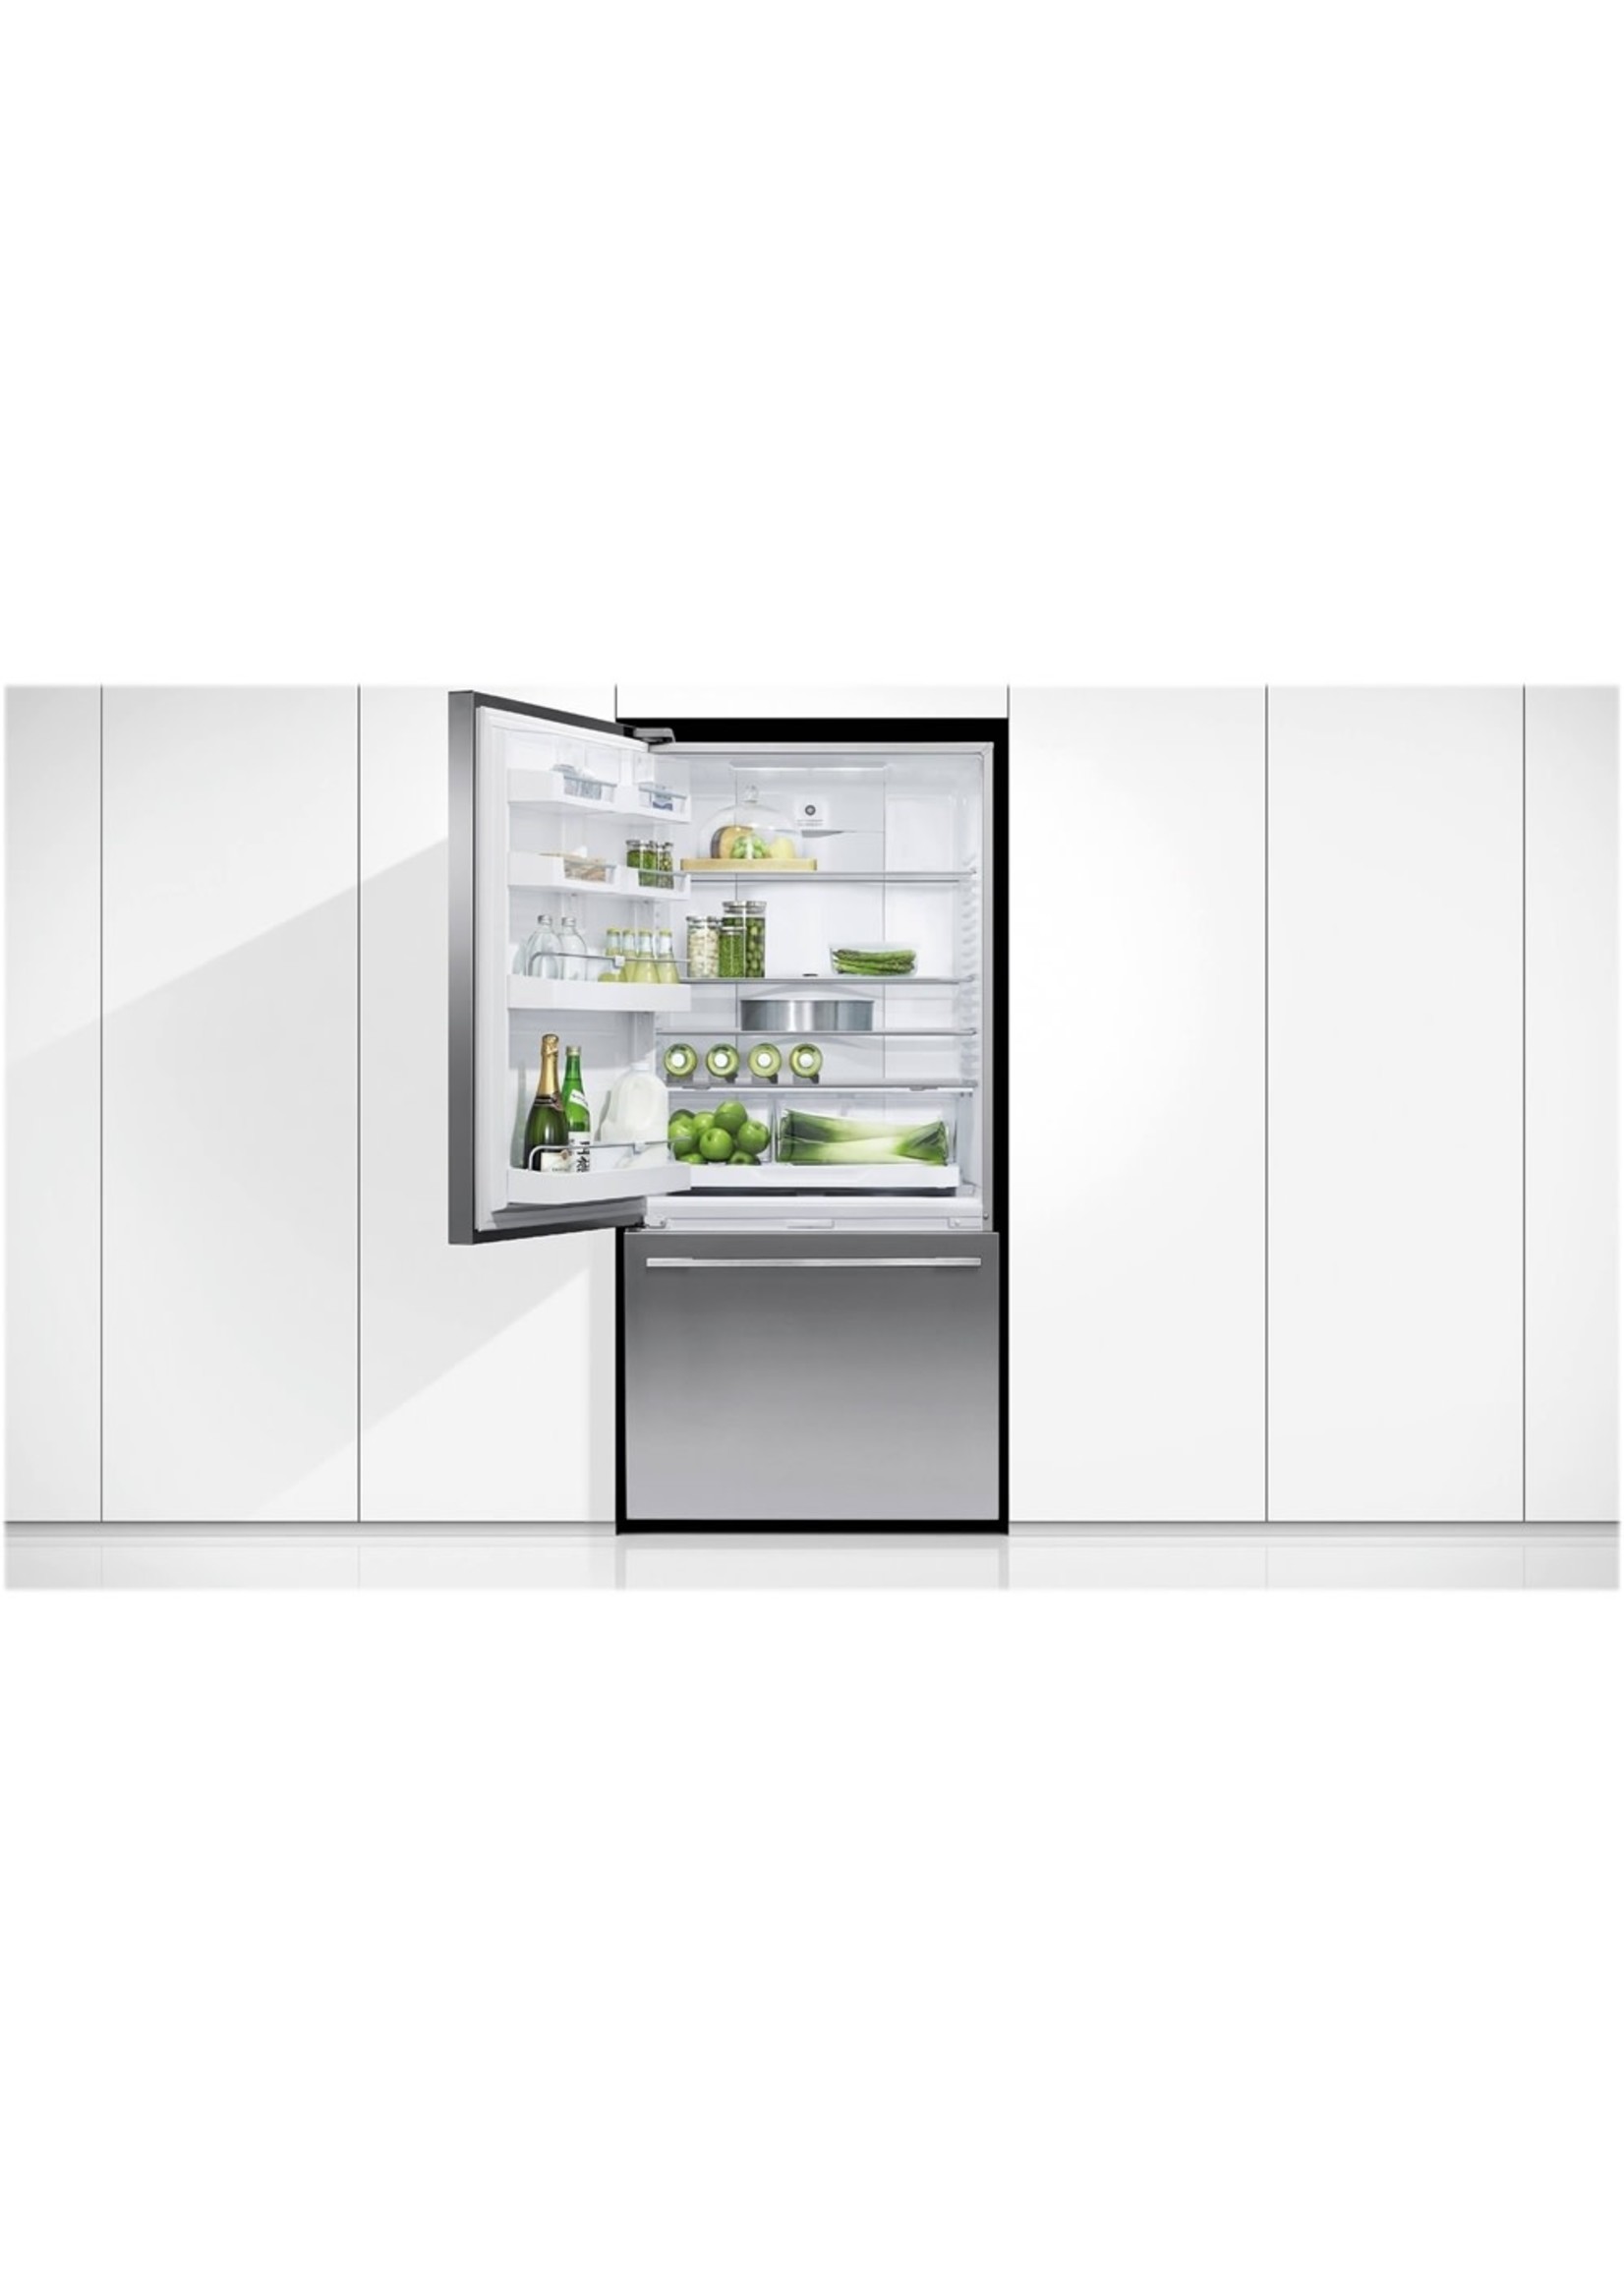 Fisher & Paykel Fisher & Paykel - ActiveSmart 17.1 Cu. Ft. Bottom-Freezer Counter-Depth Refrigerator - Stainless steel